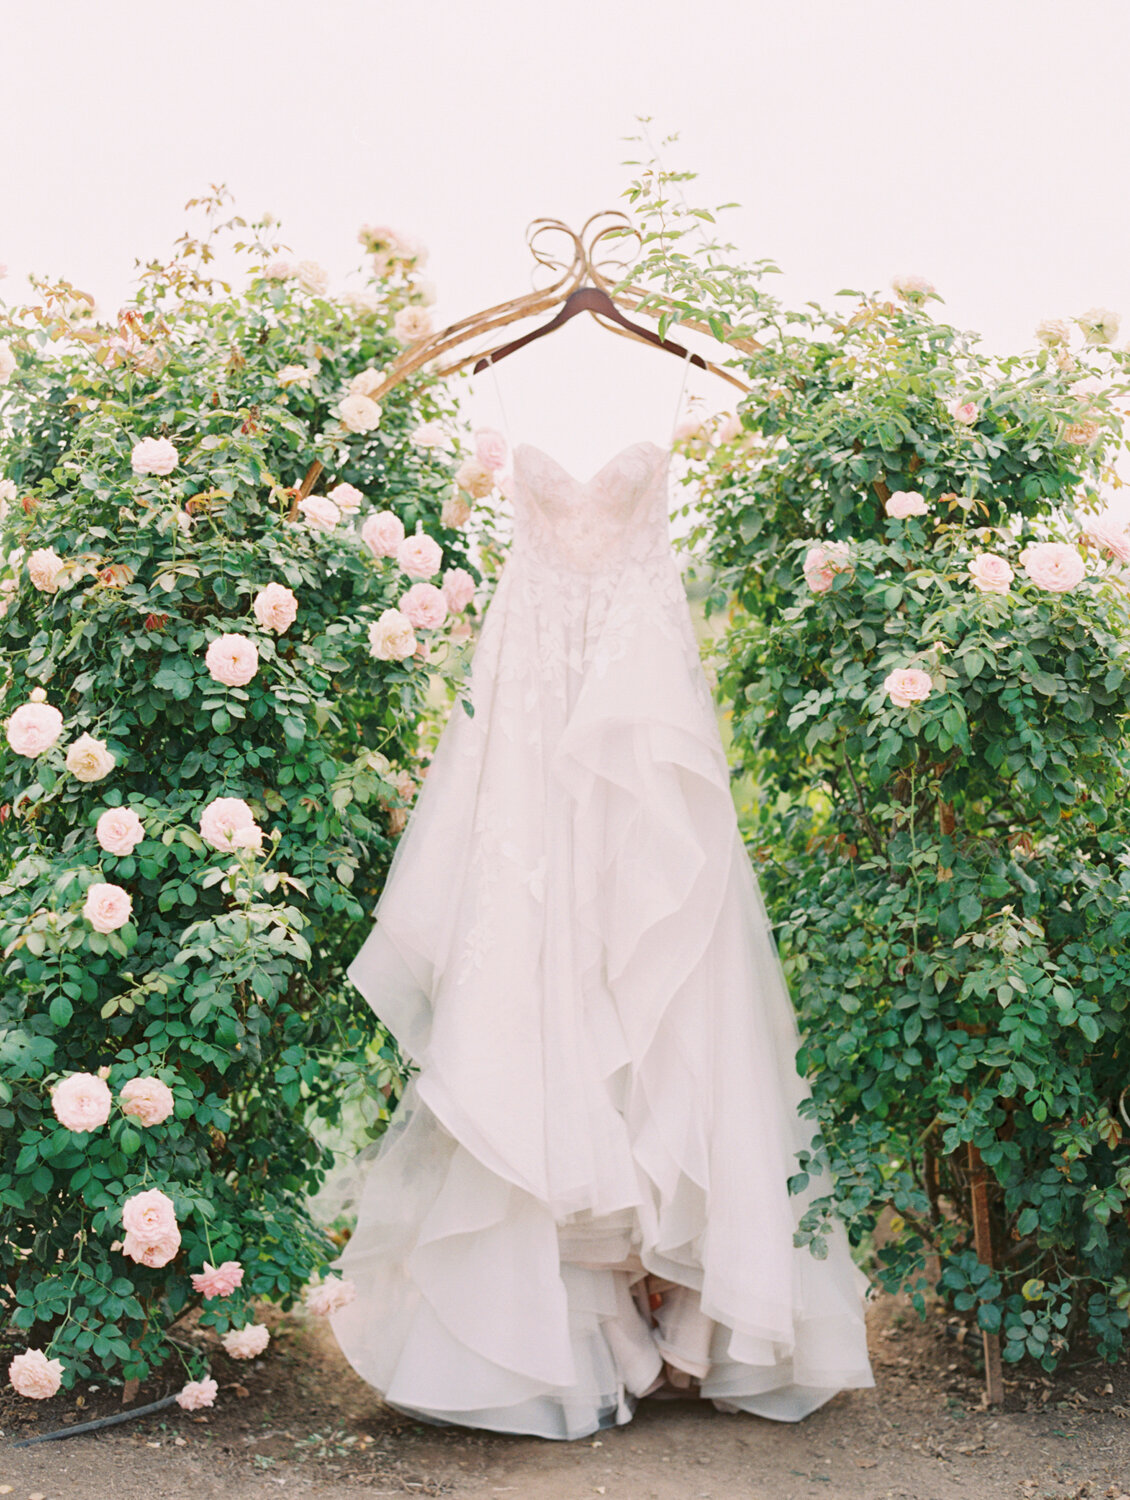 wisteria-photography.com | Wisteria Photography | Intimate Rose Garden Wedding | Santa Ynez | Featured on Green Wedding Shoes | Southern California Photographer-1.jpg